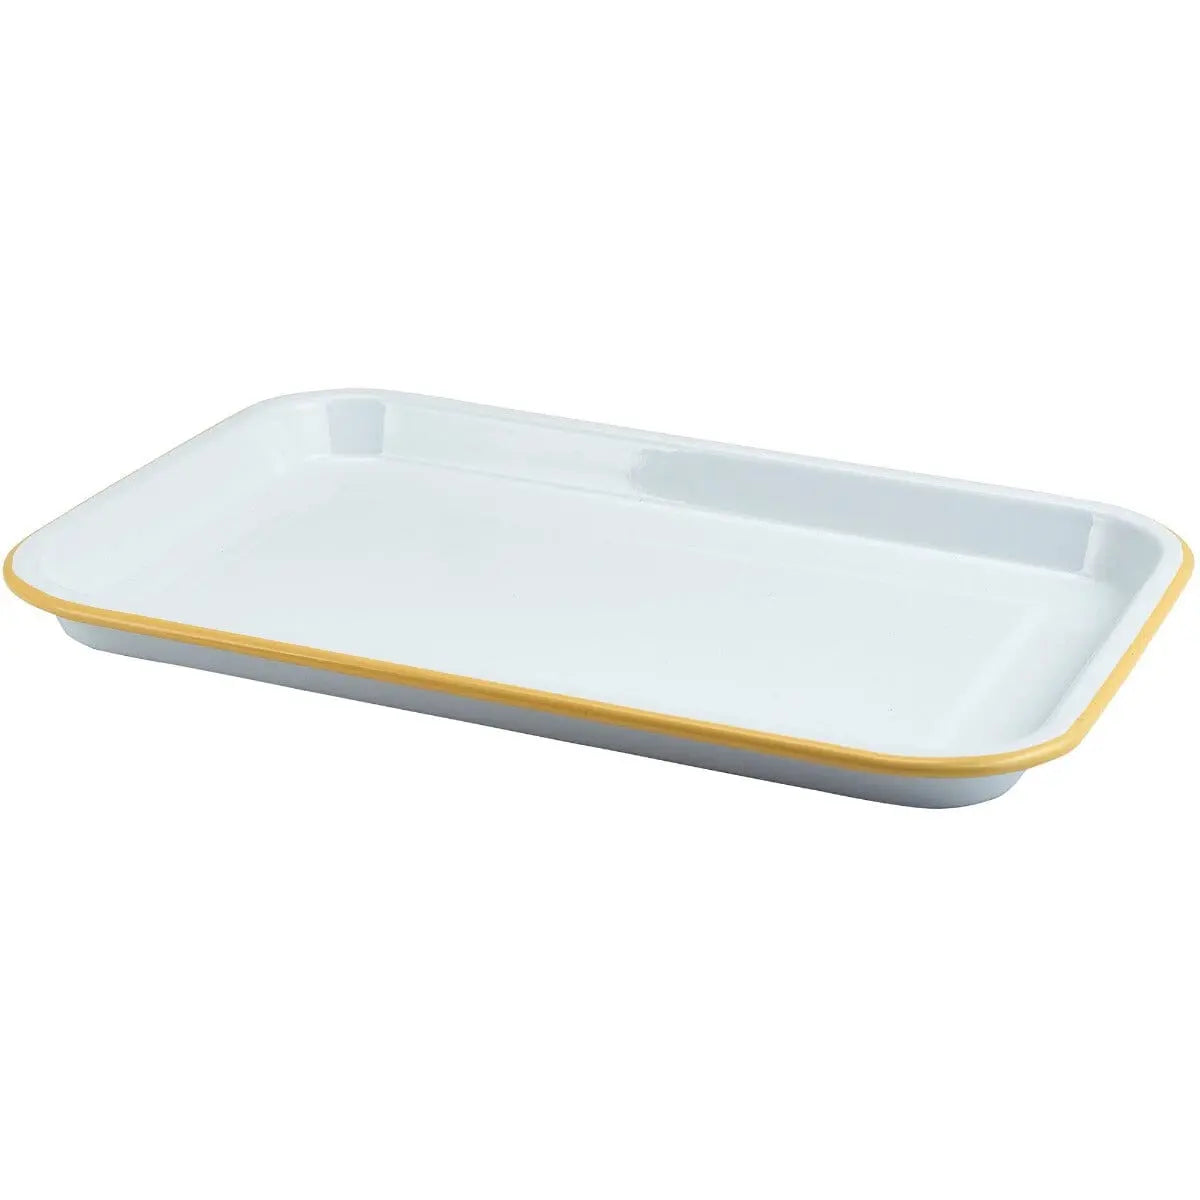 Personalised Cookies Enamel Baking Tray Enamel - White with Yellow Rim  